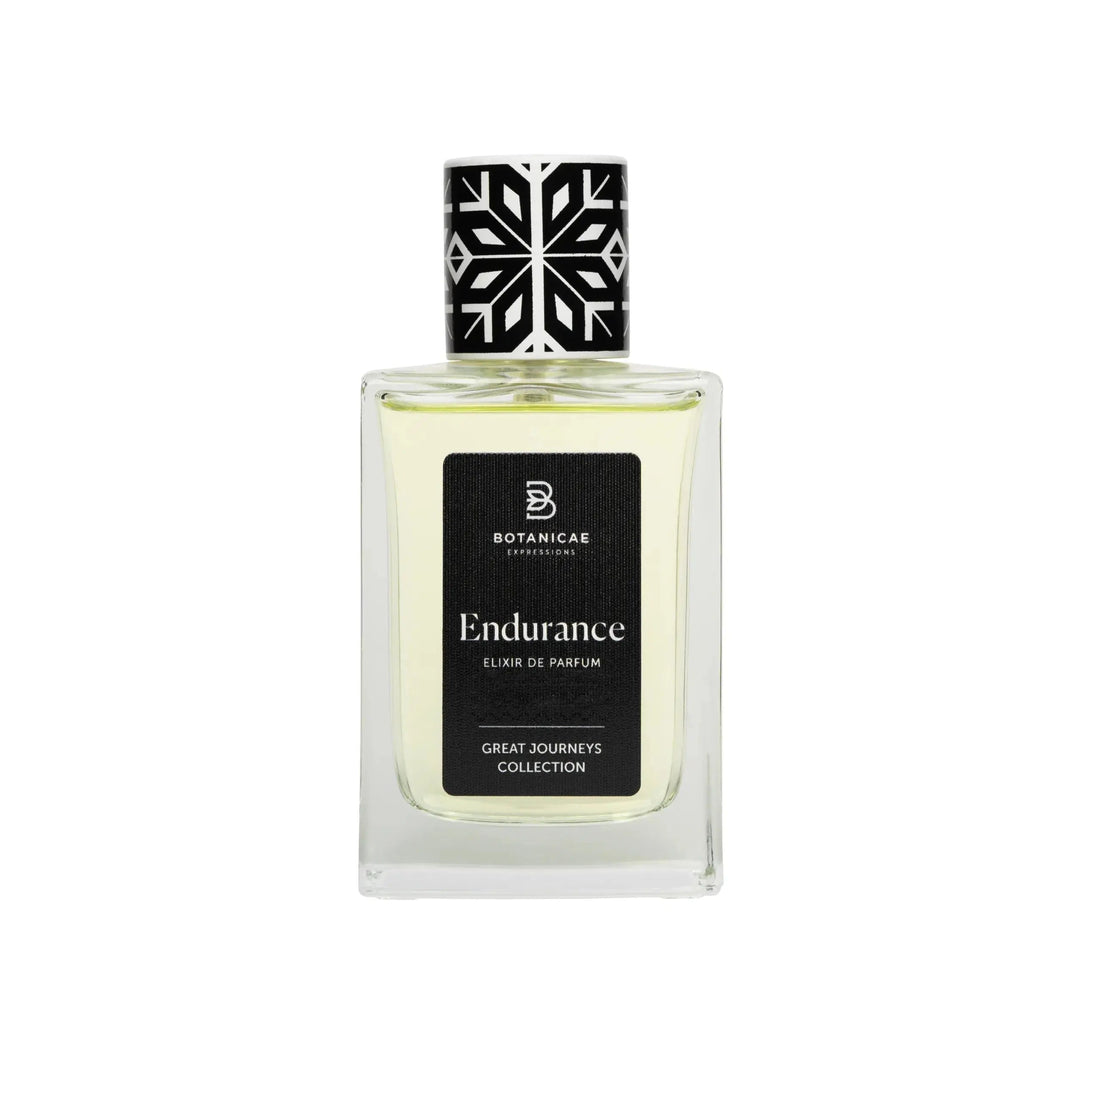 Endurance Elixir de perfume Botanicae - 75 ml